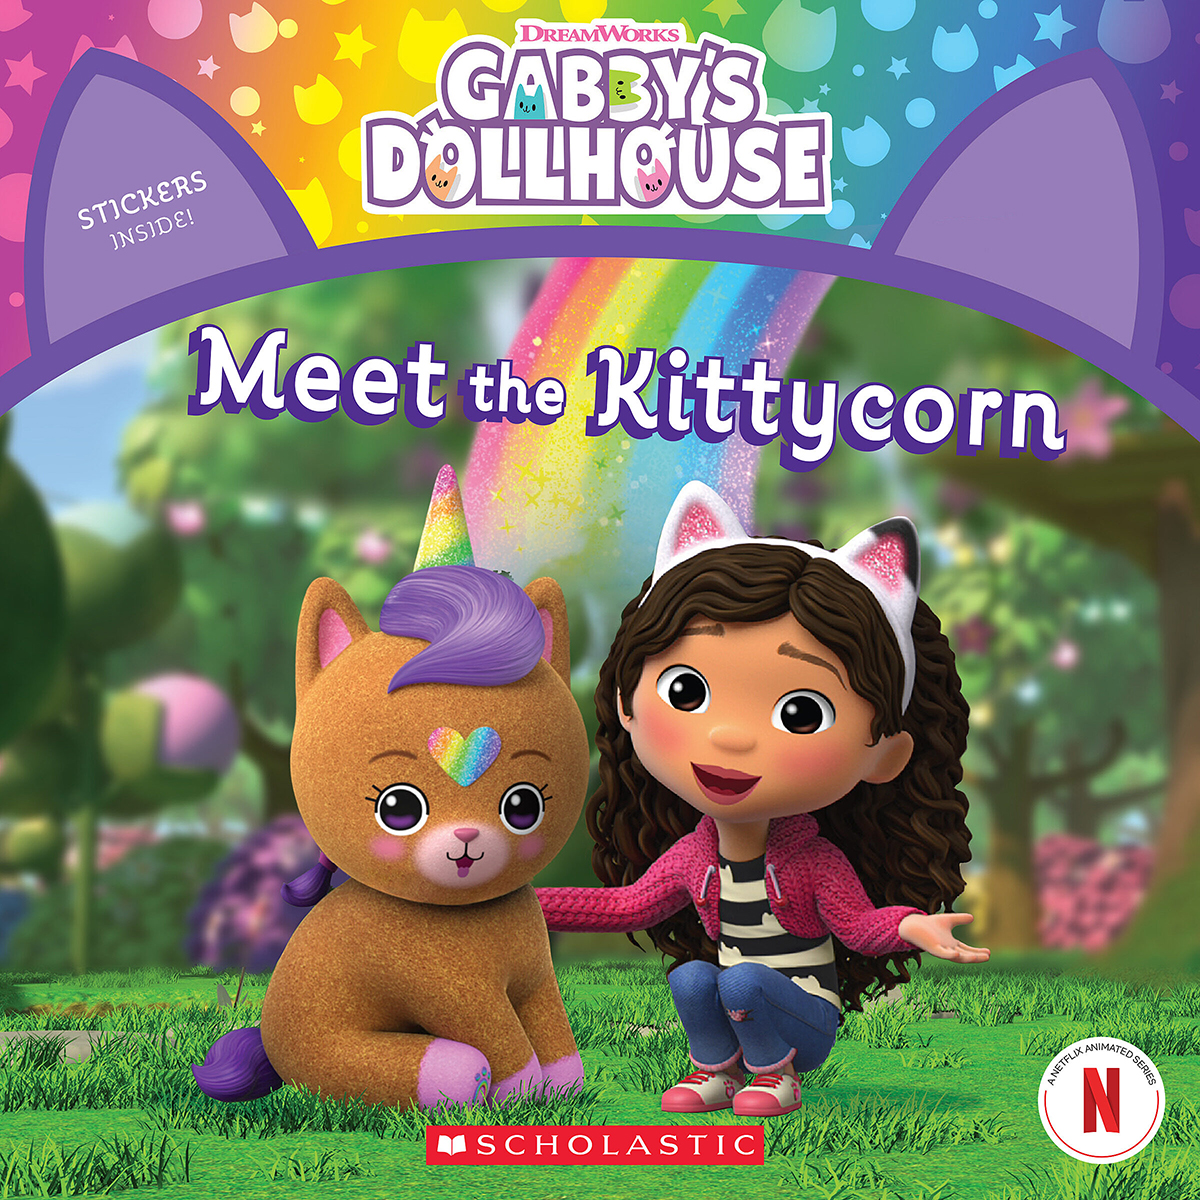  Gabby's Dollhouse Meet the Kittycorn 